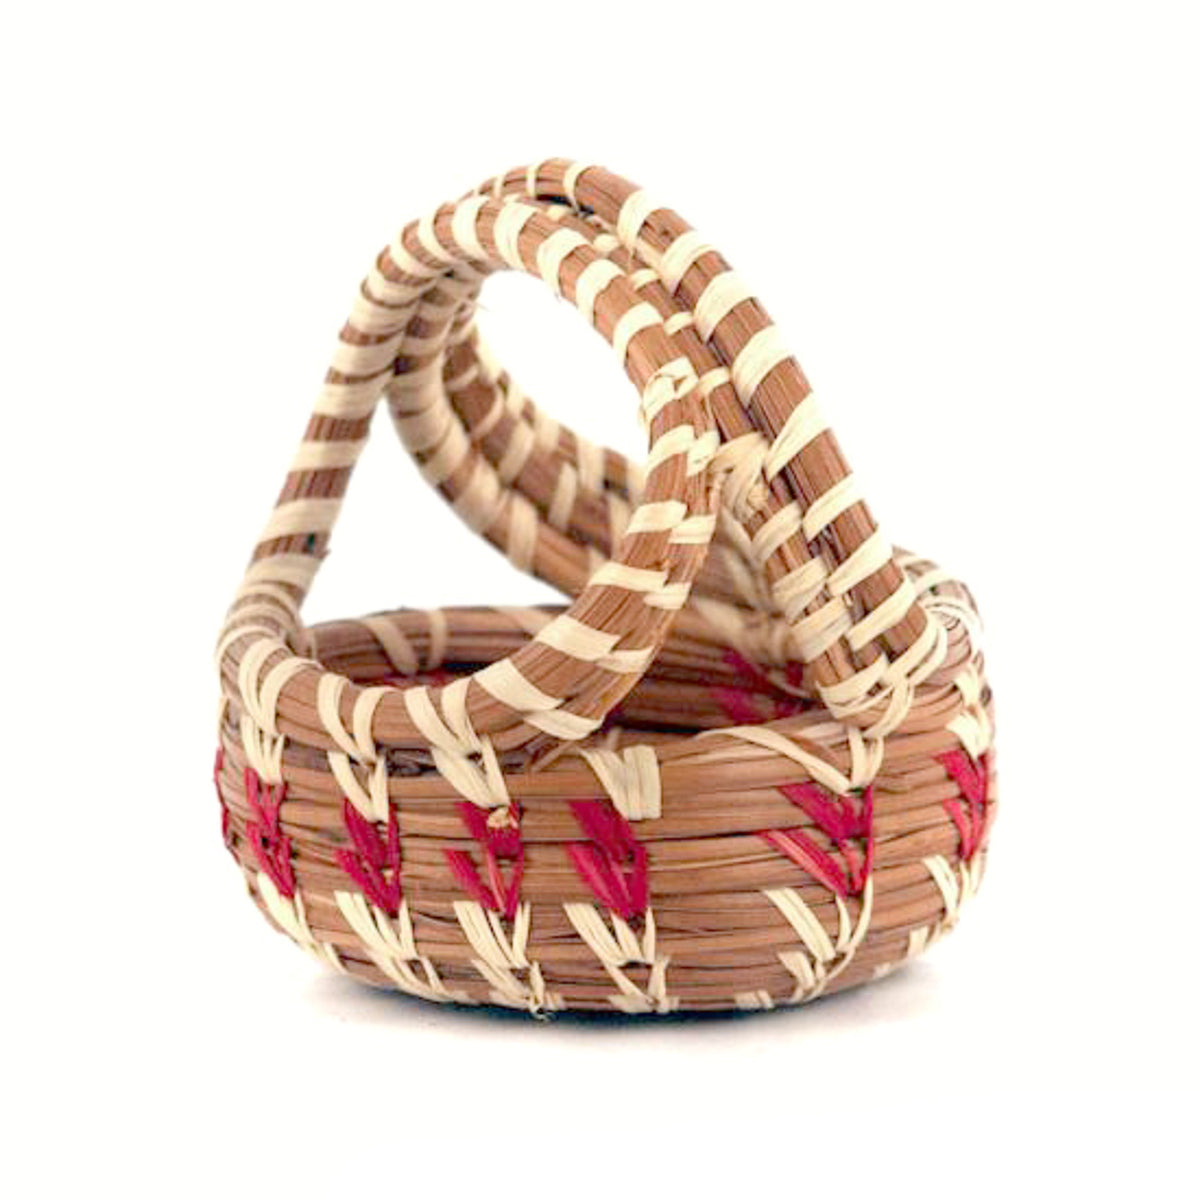 Miniature handmade pine needle basket with handle | Mayan Hands